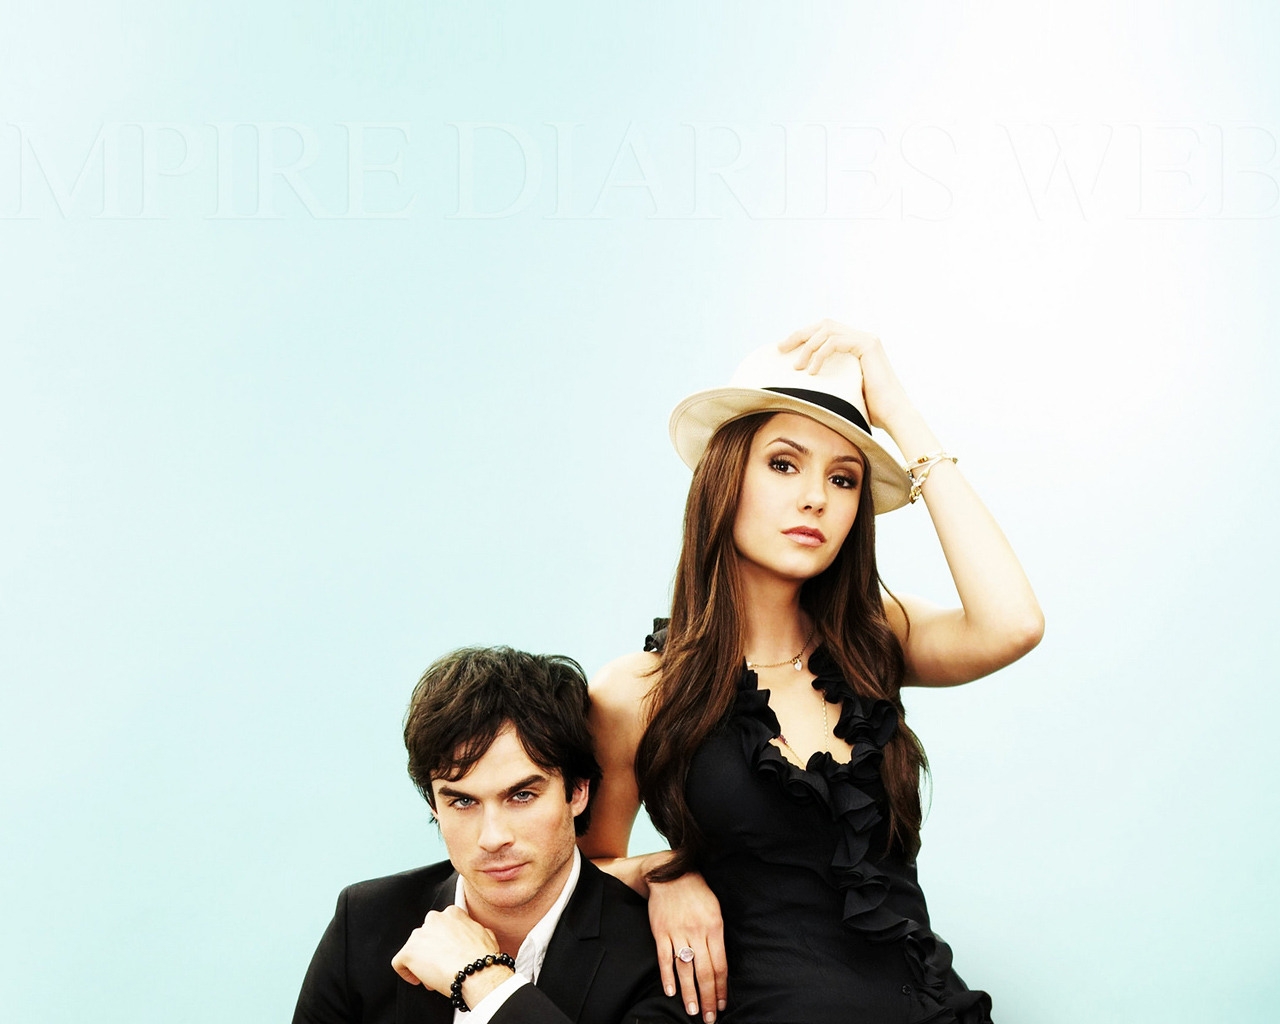 Nina Dobrev and Ian Somerhalder for 1280 x 1024 resolution